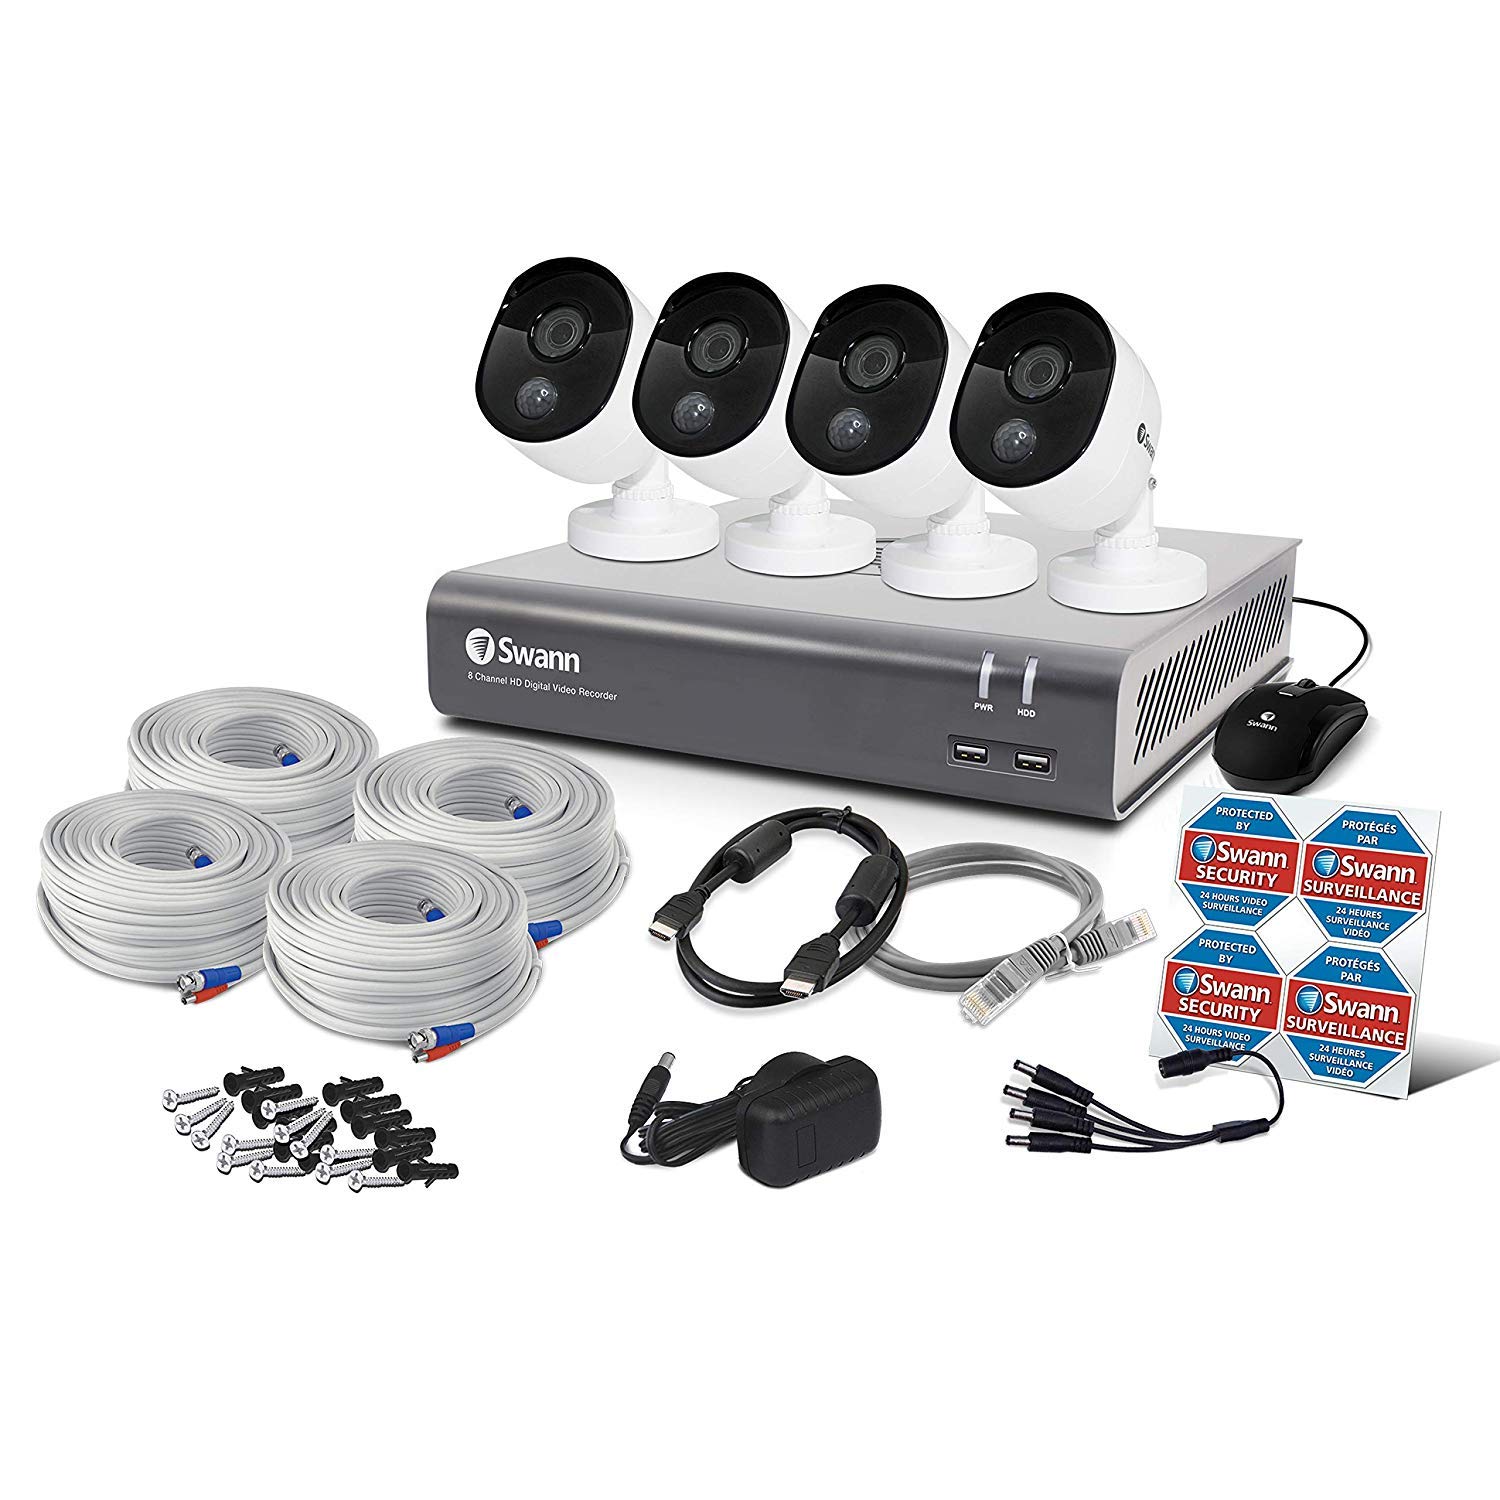 Swann 4 Camera 8 Channel 1080p DVR Security System |1TB HDD, Heat & Motion Sensing + Night Vision